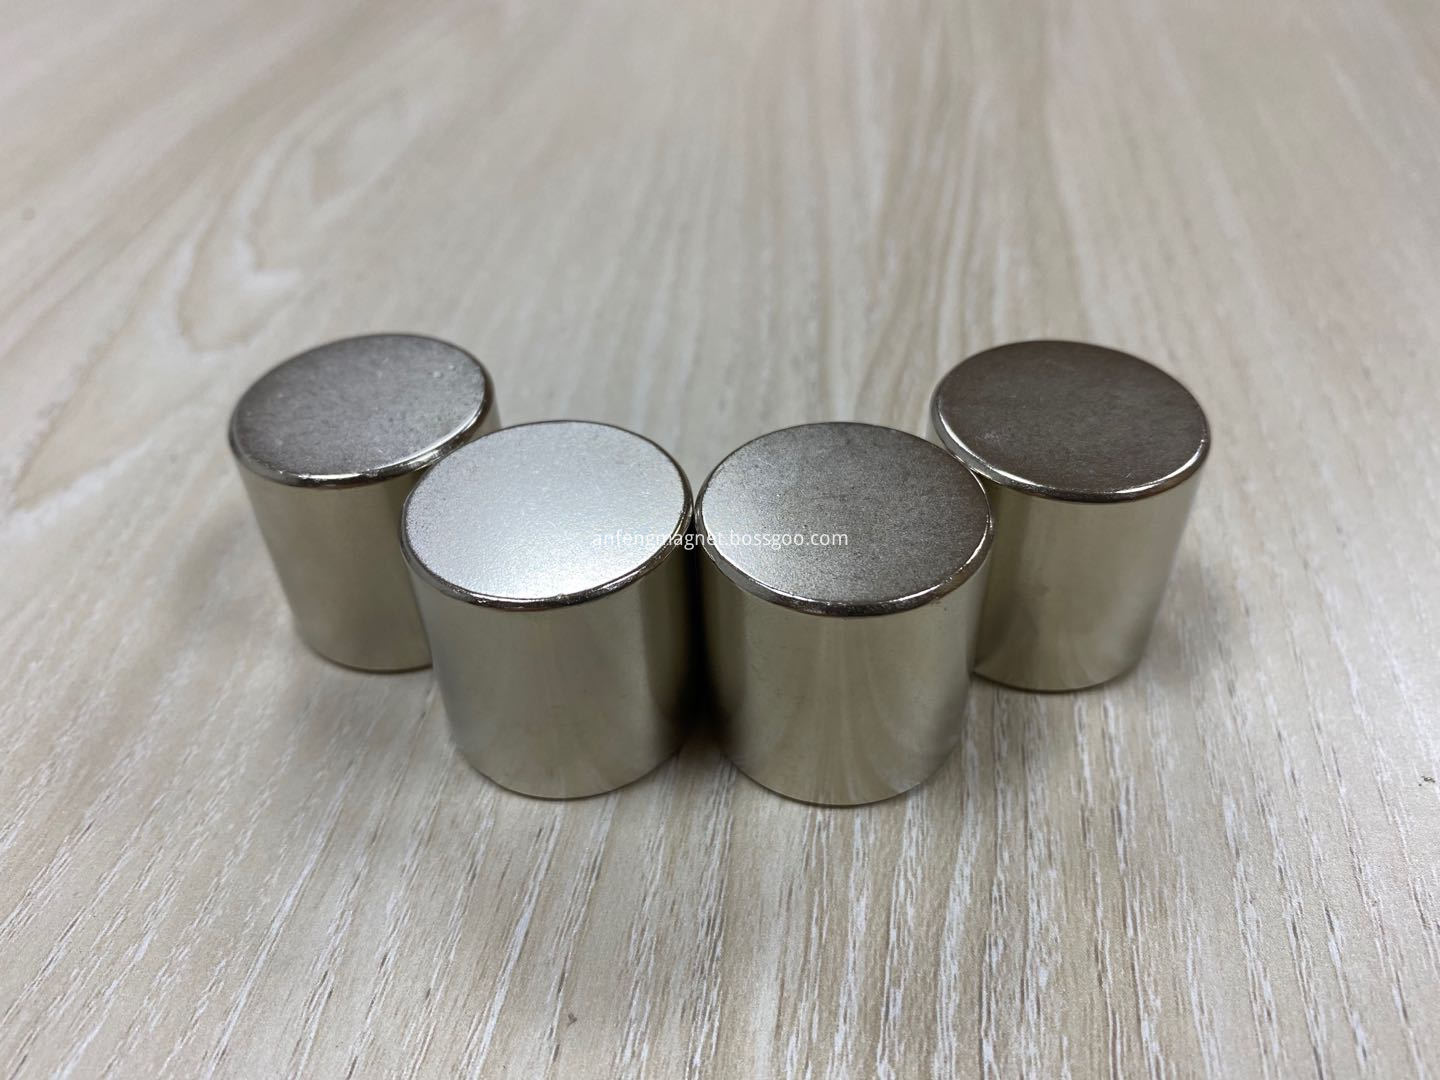 1x1 inch Super Strong Neodymium Cylinder Magnets